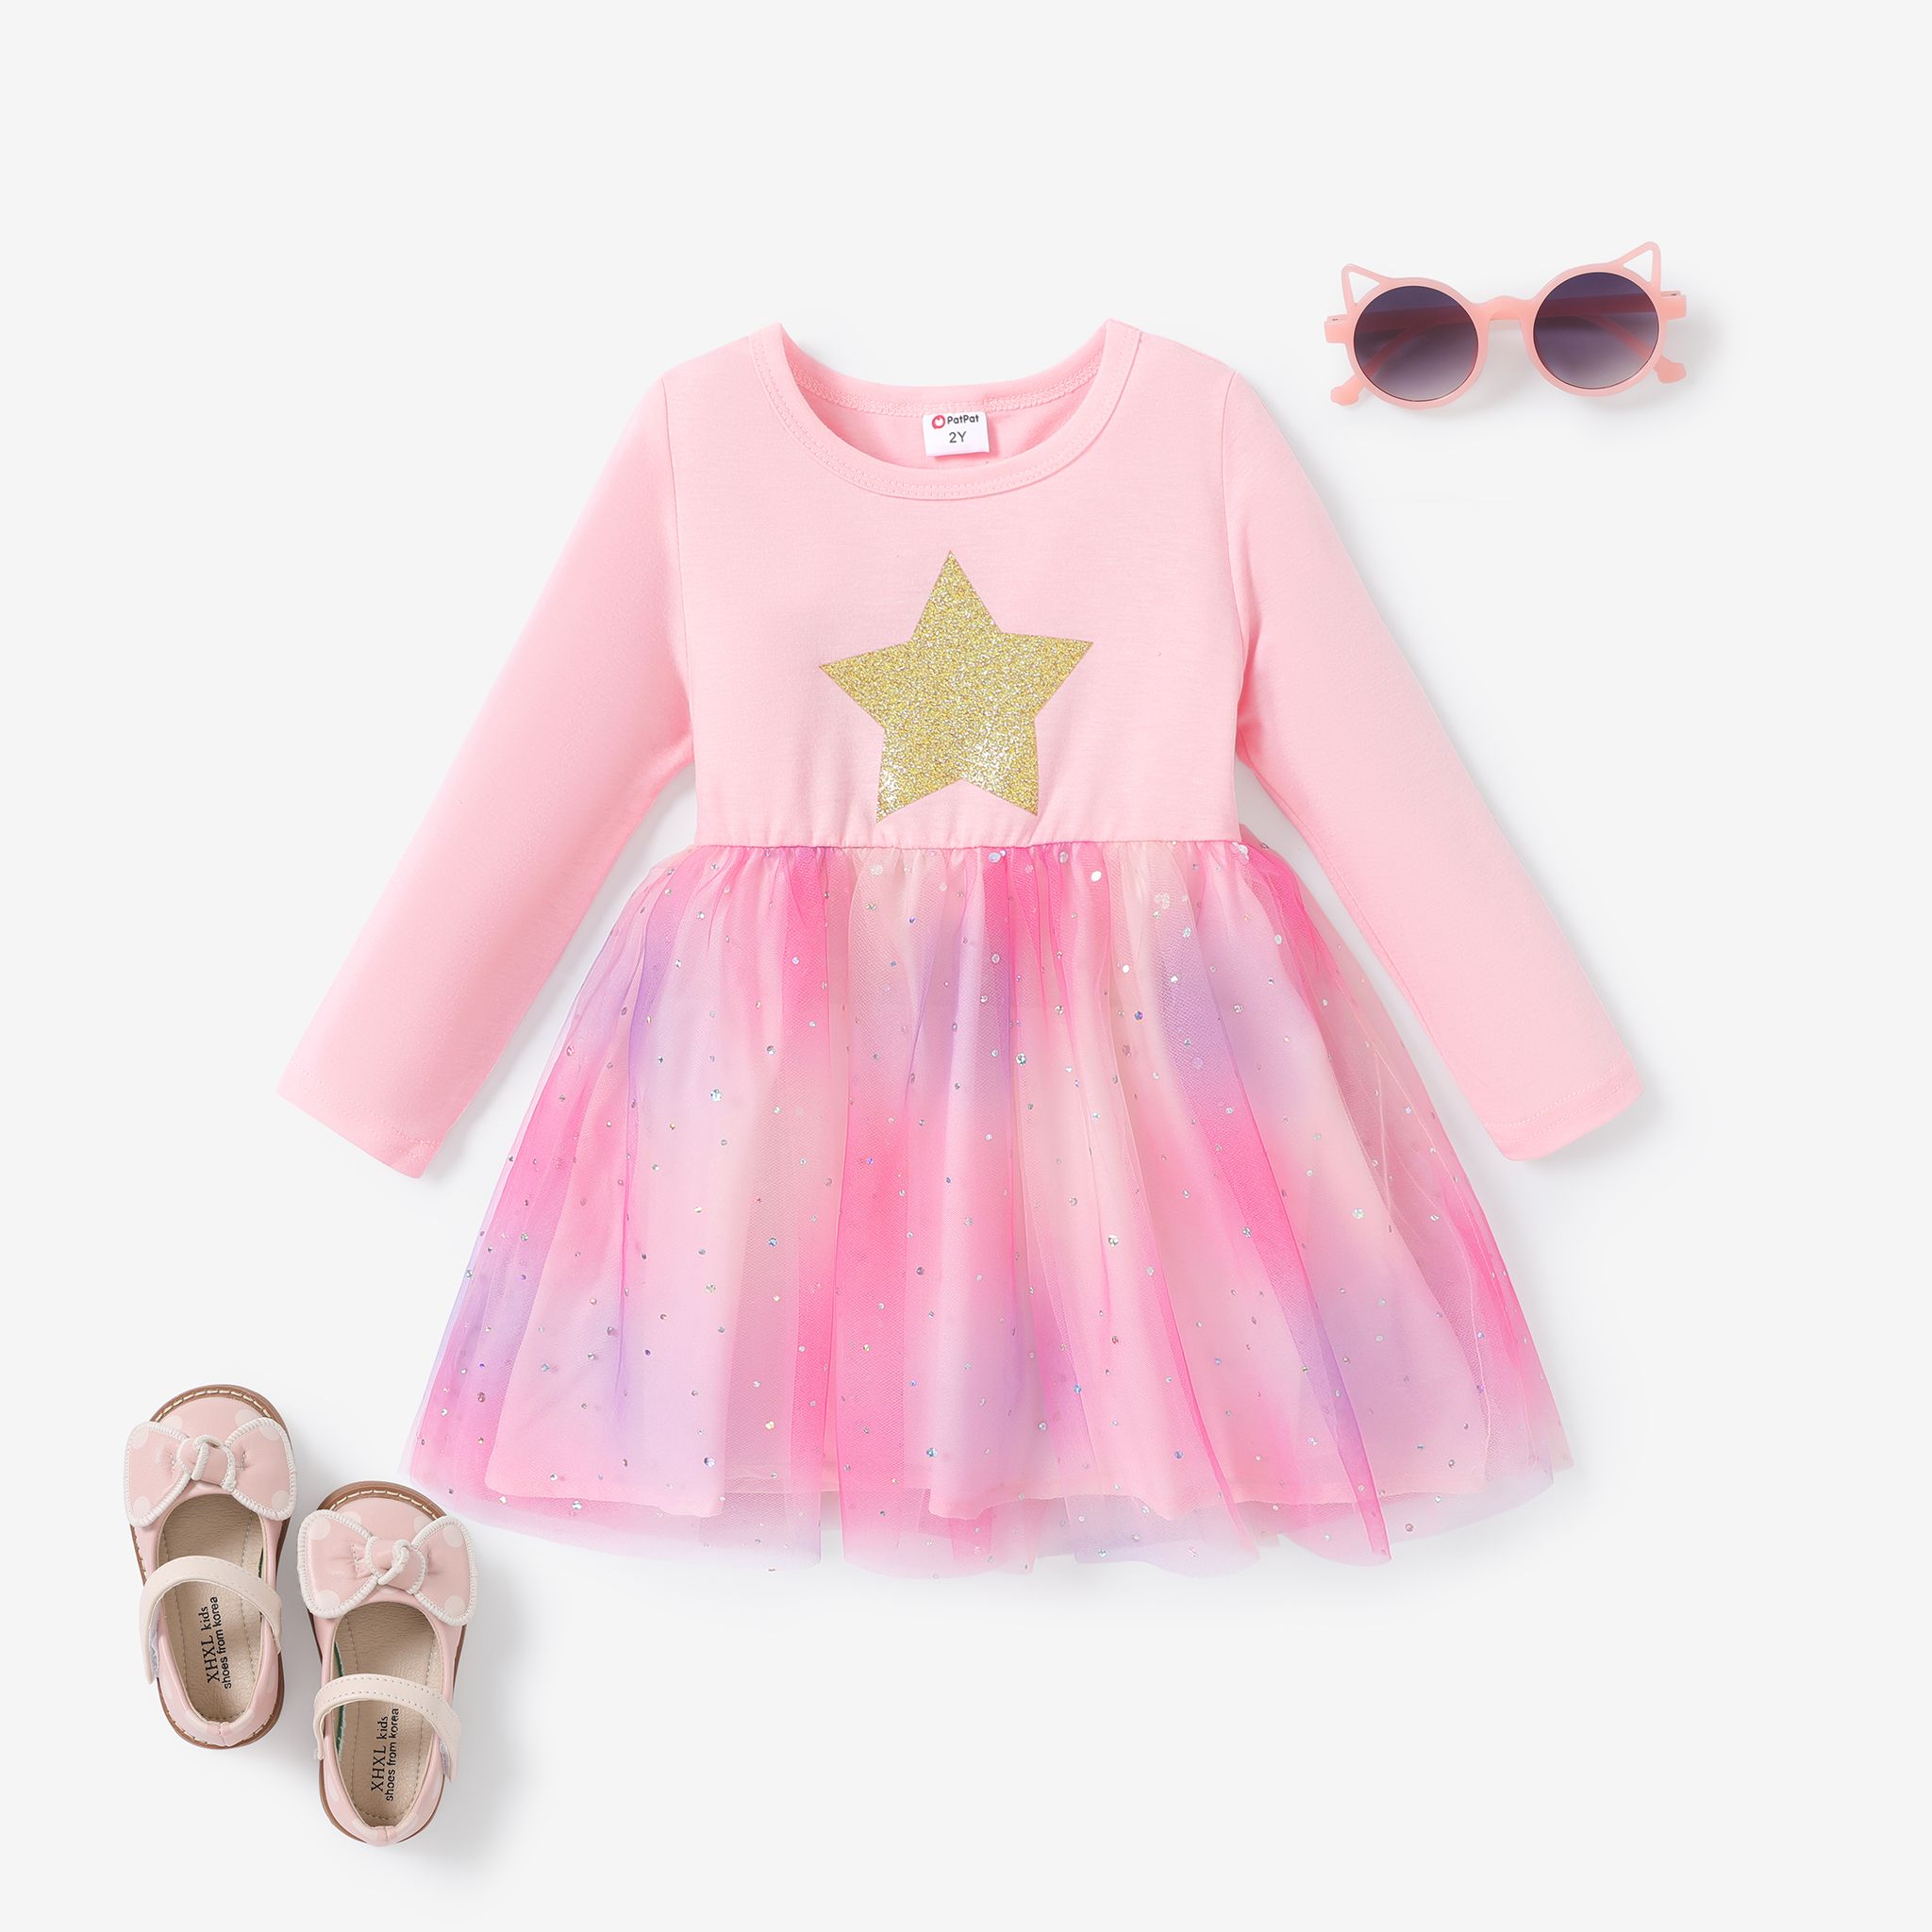 Sweet Toddler Girl Mesh Dress - Multi-Layered Stars/Moon/Clouds Print - Long Sleeve - Set of 1